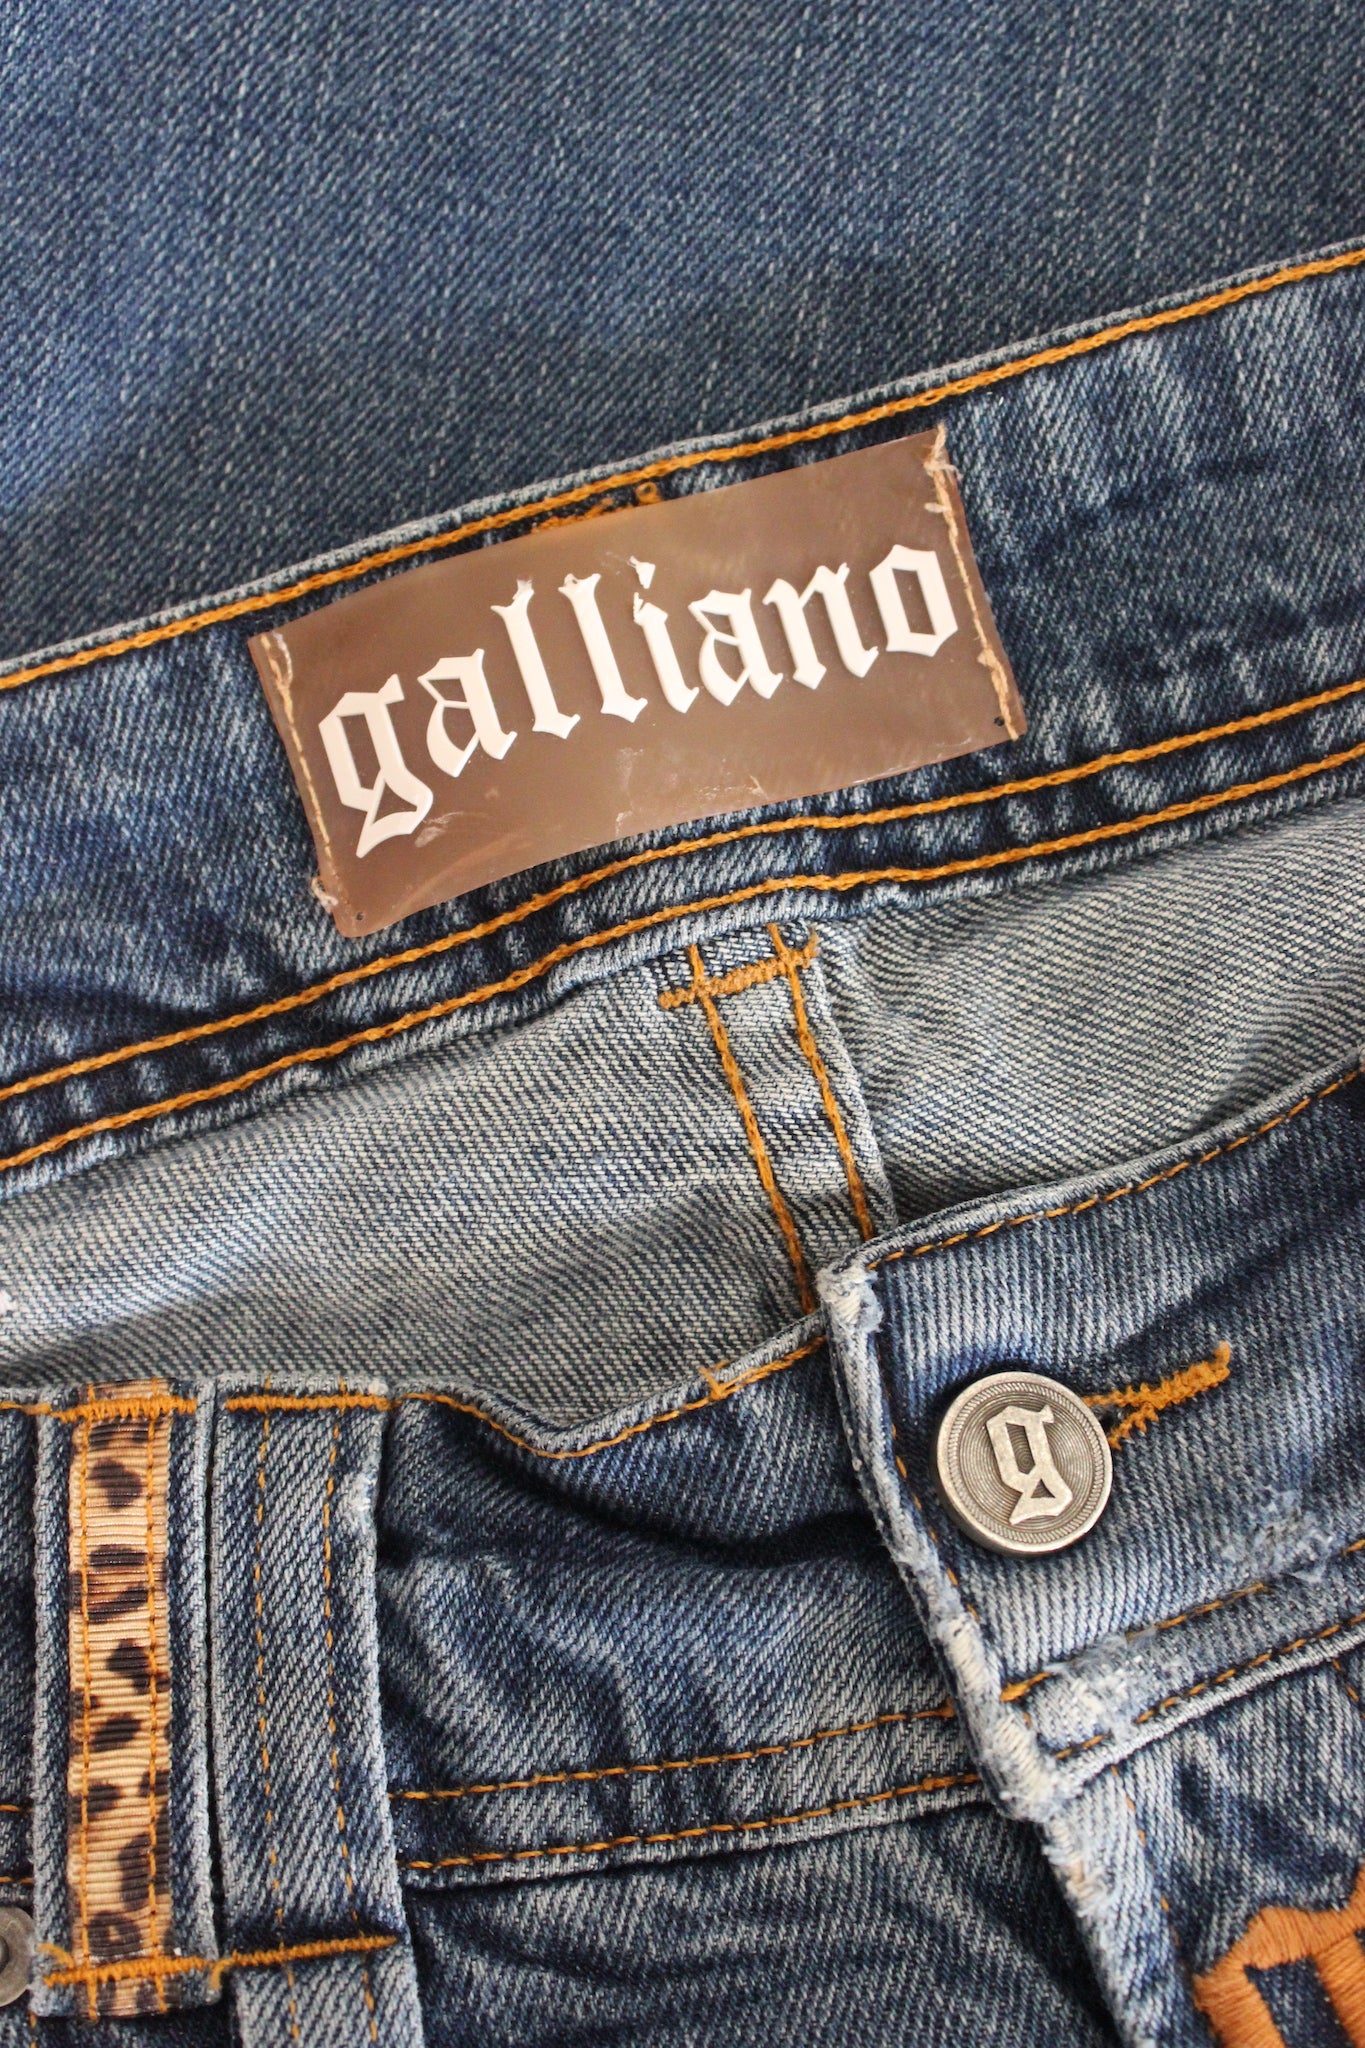 John Galliano Blue Straight Jeans Vintage 2000s